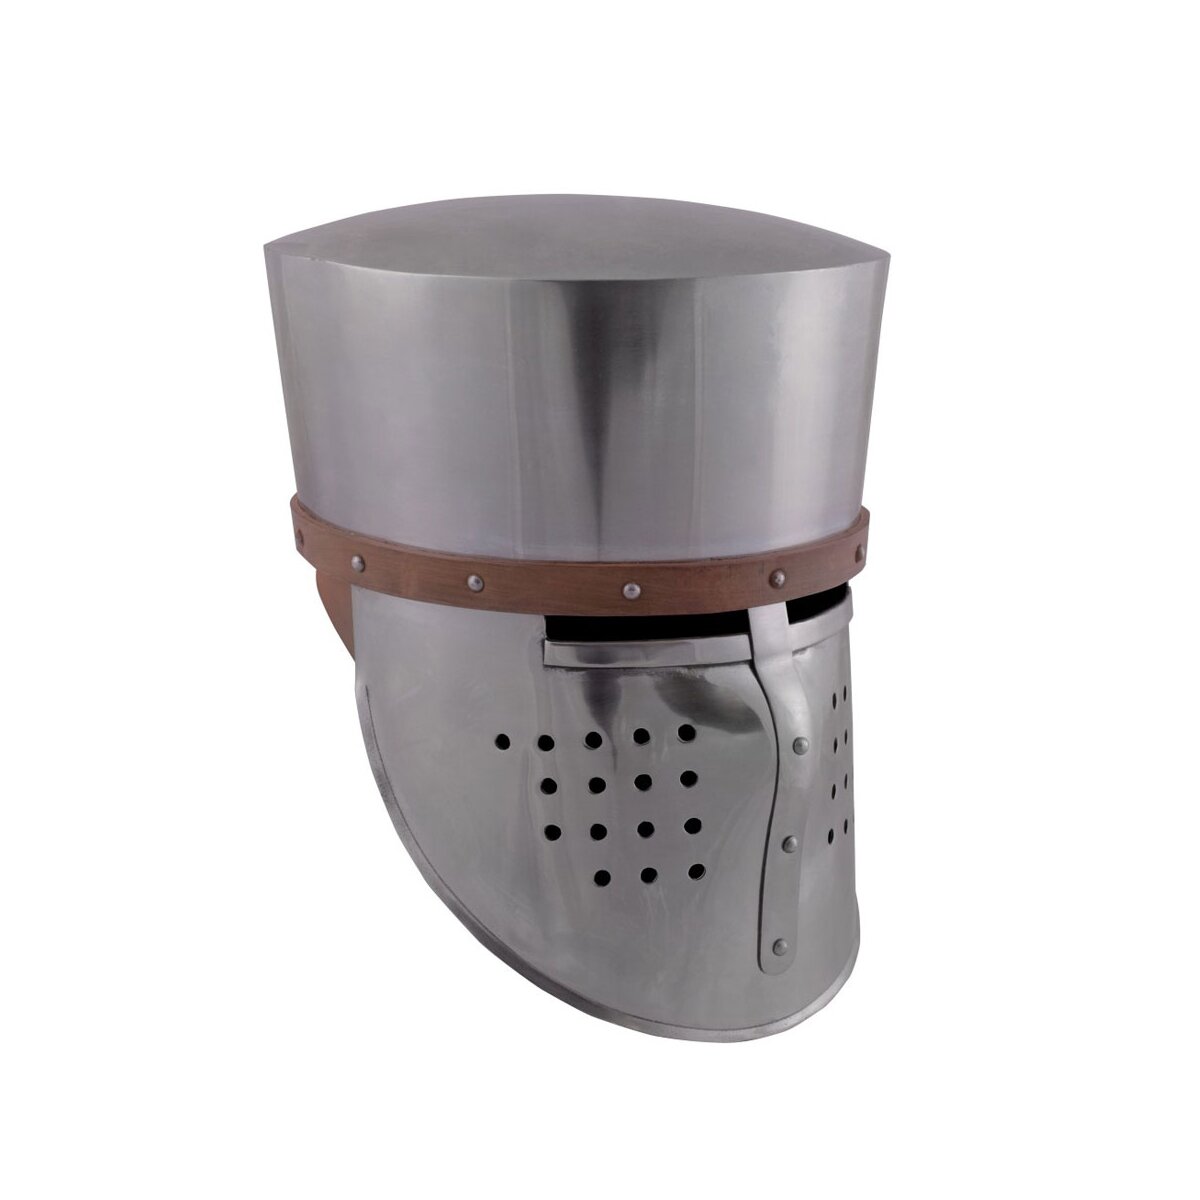 Crusader pot helm, 2 mm steel, with leather liner